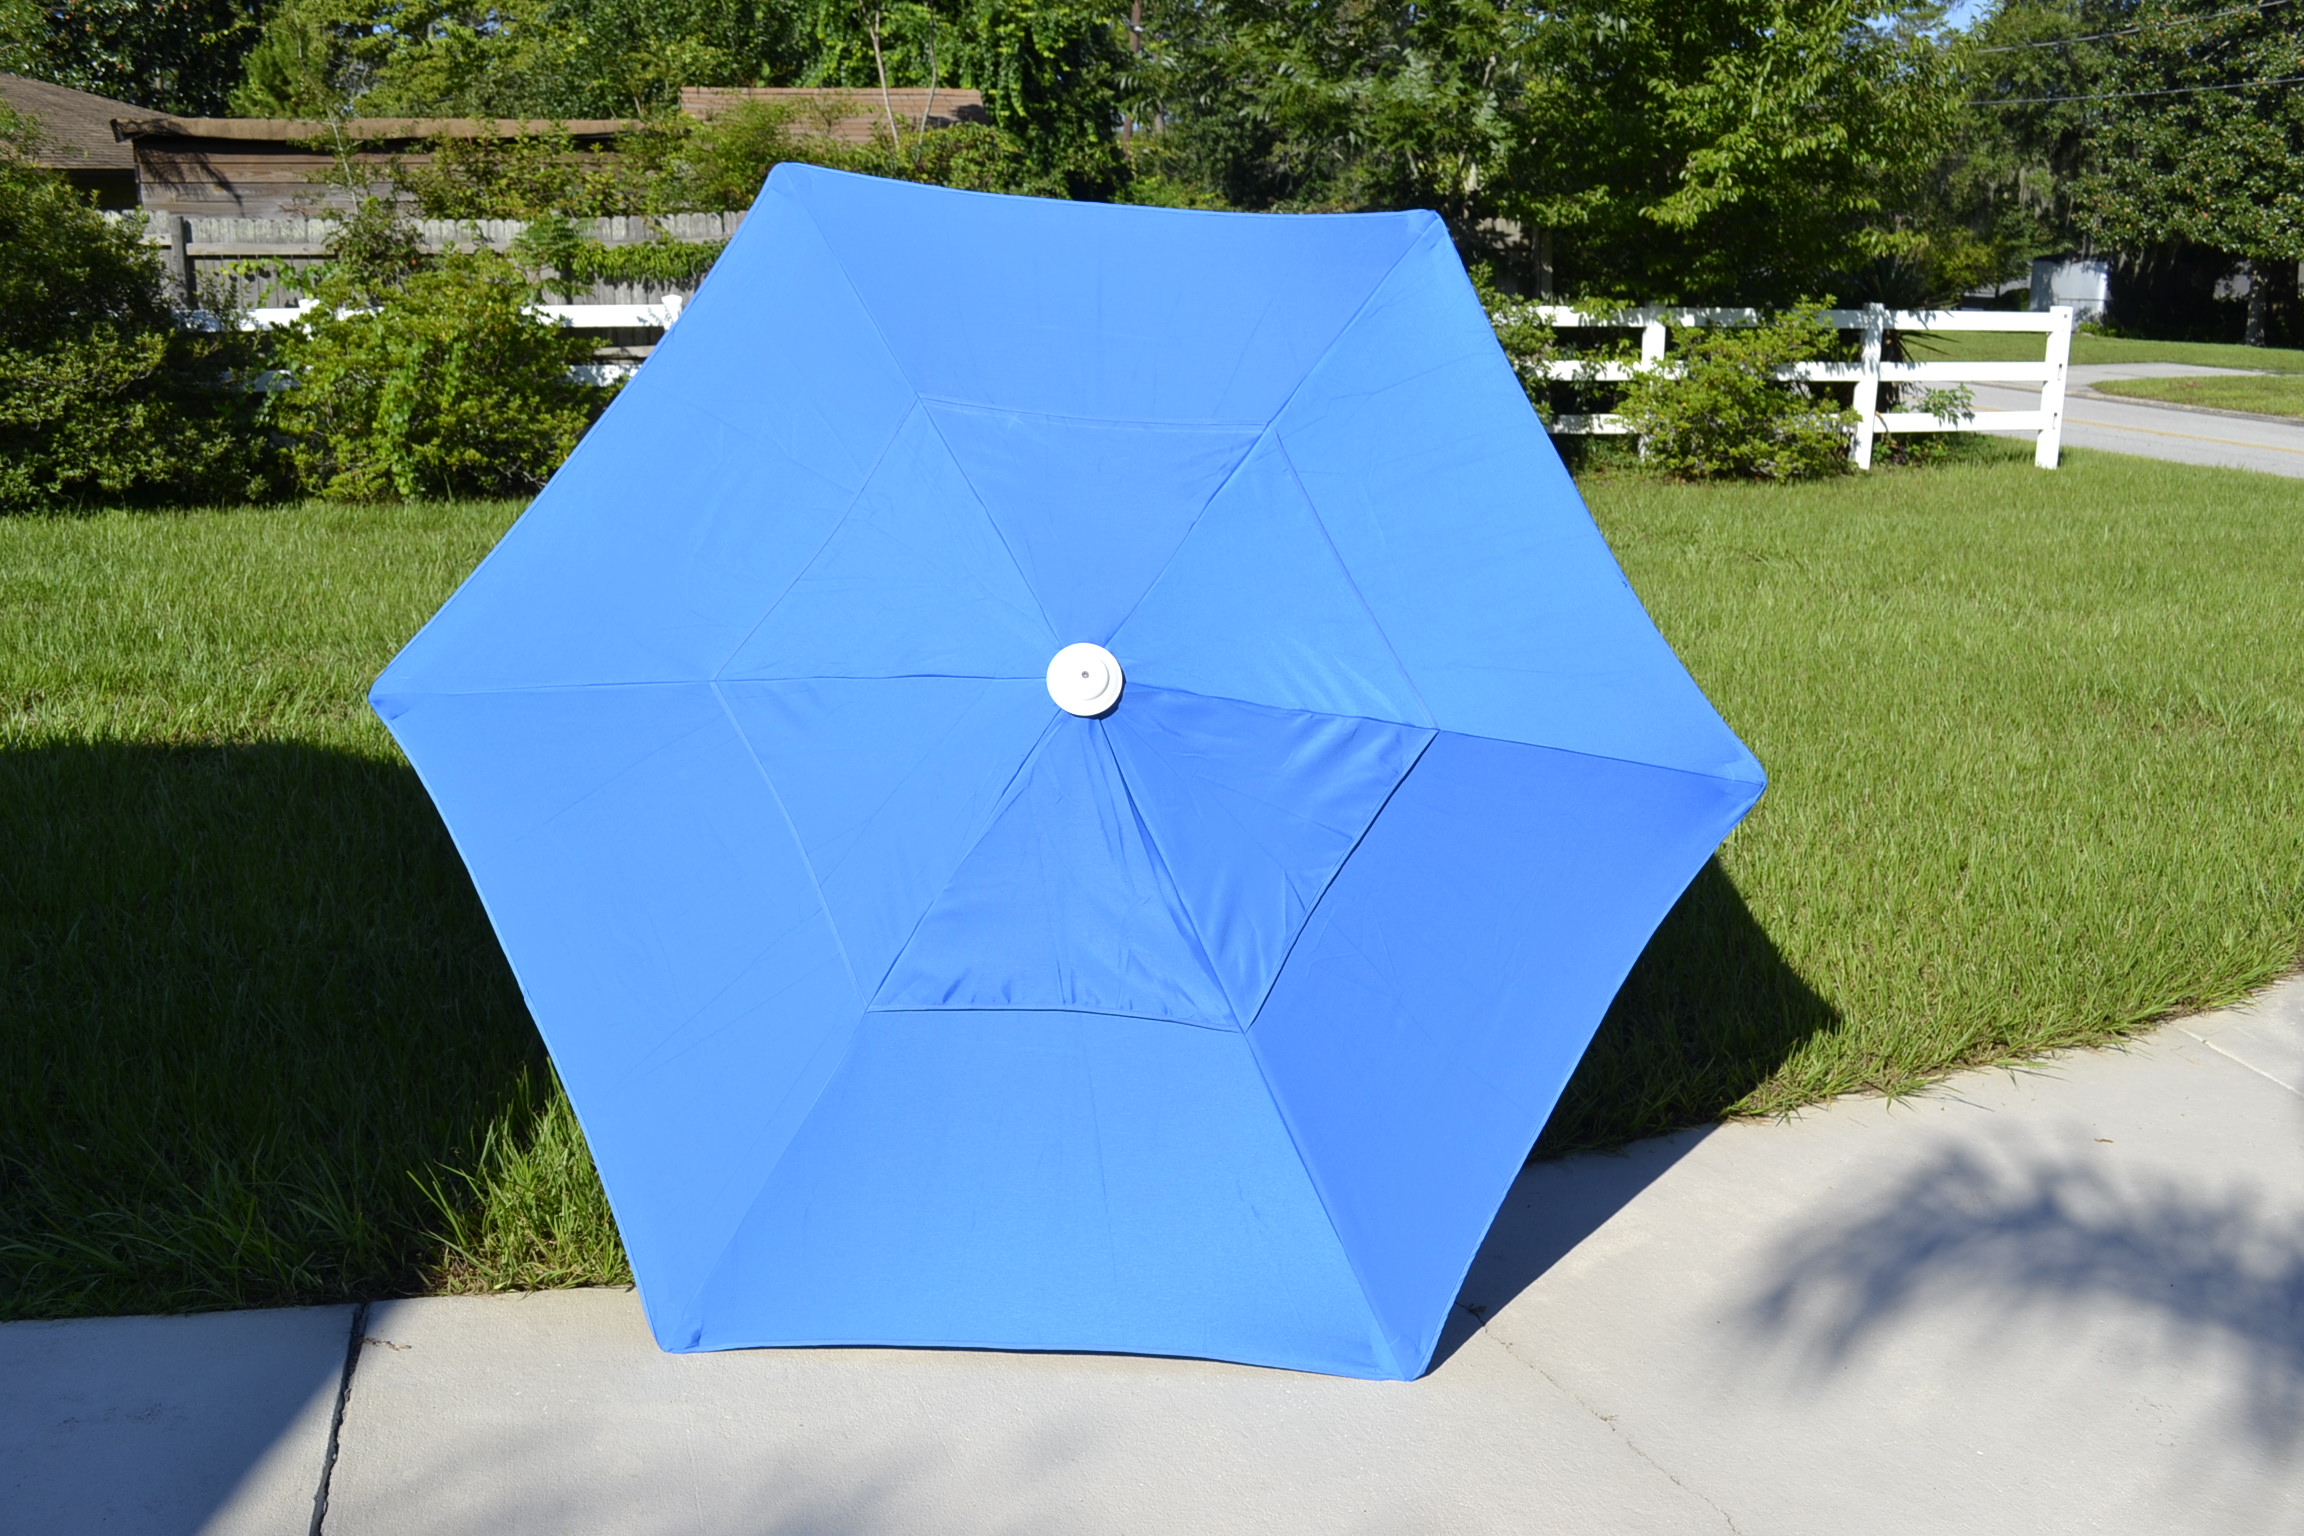 affordable beach umbrella